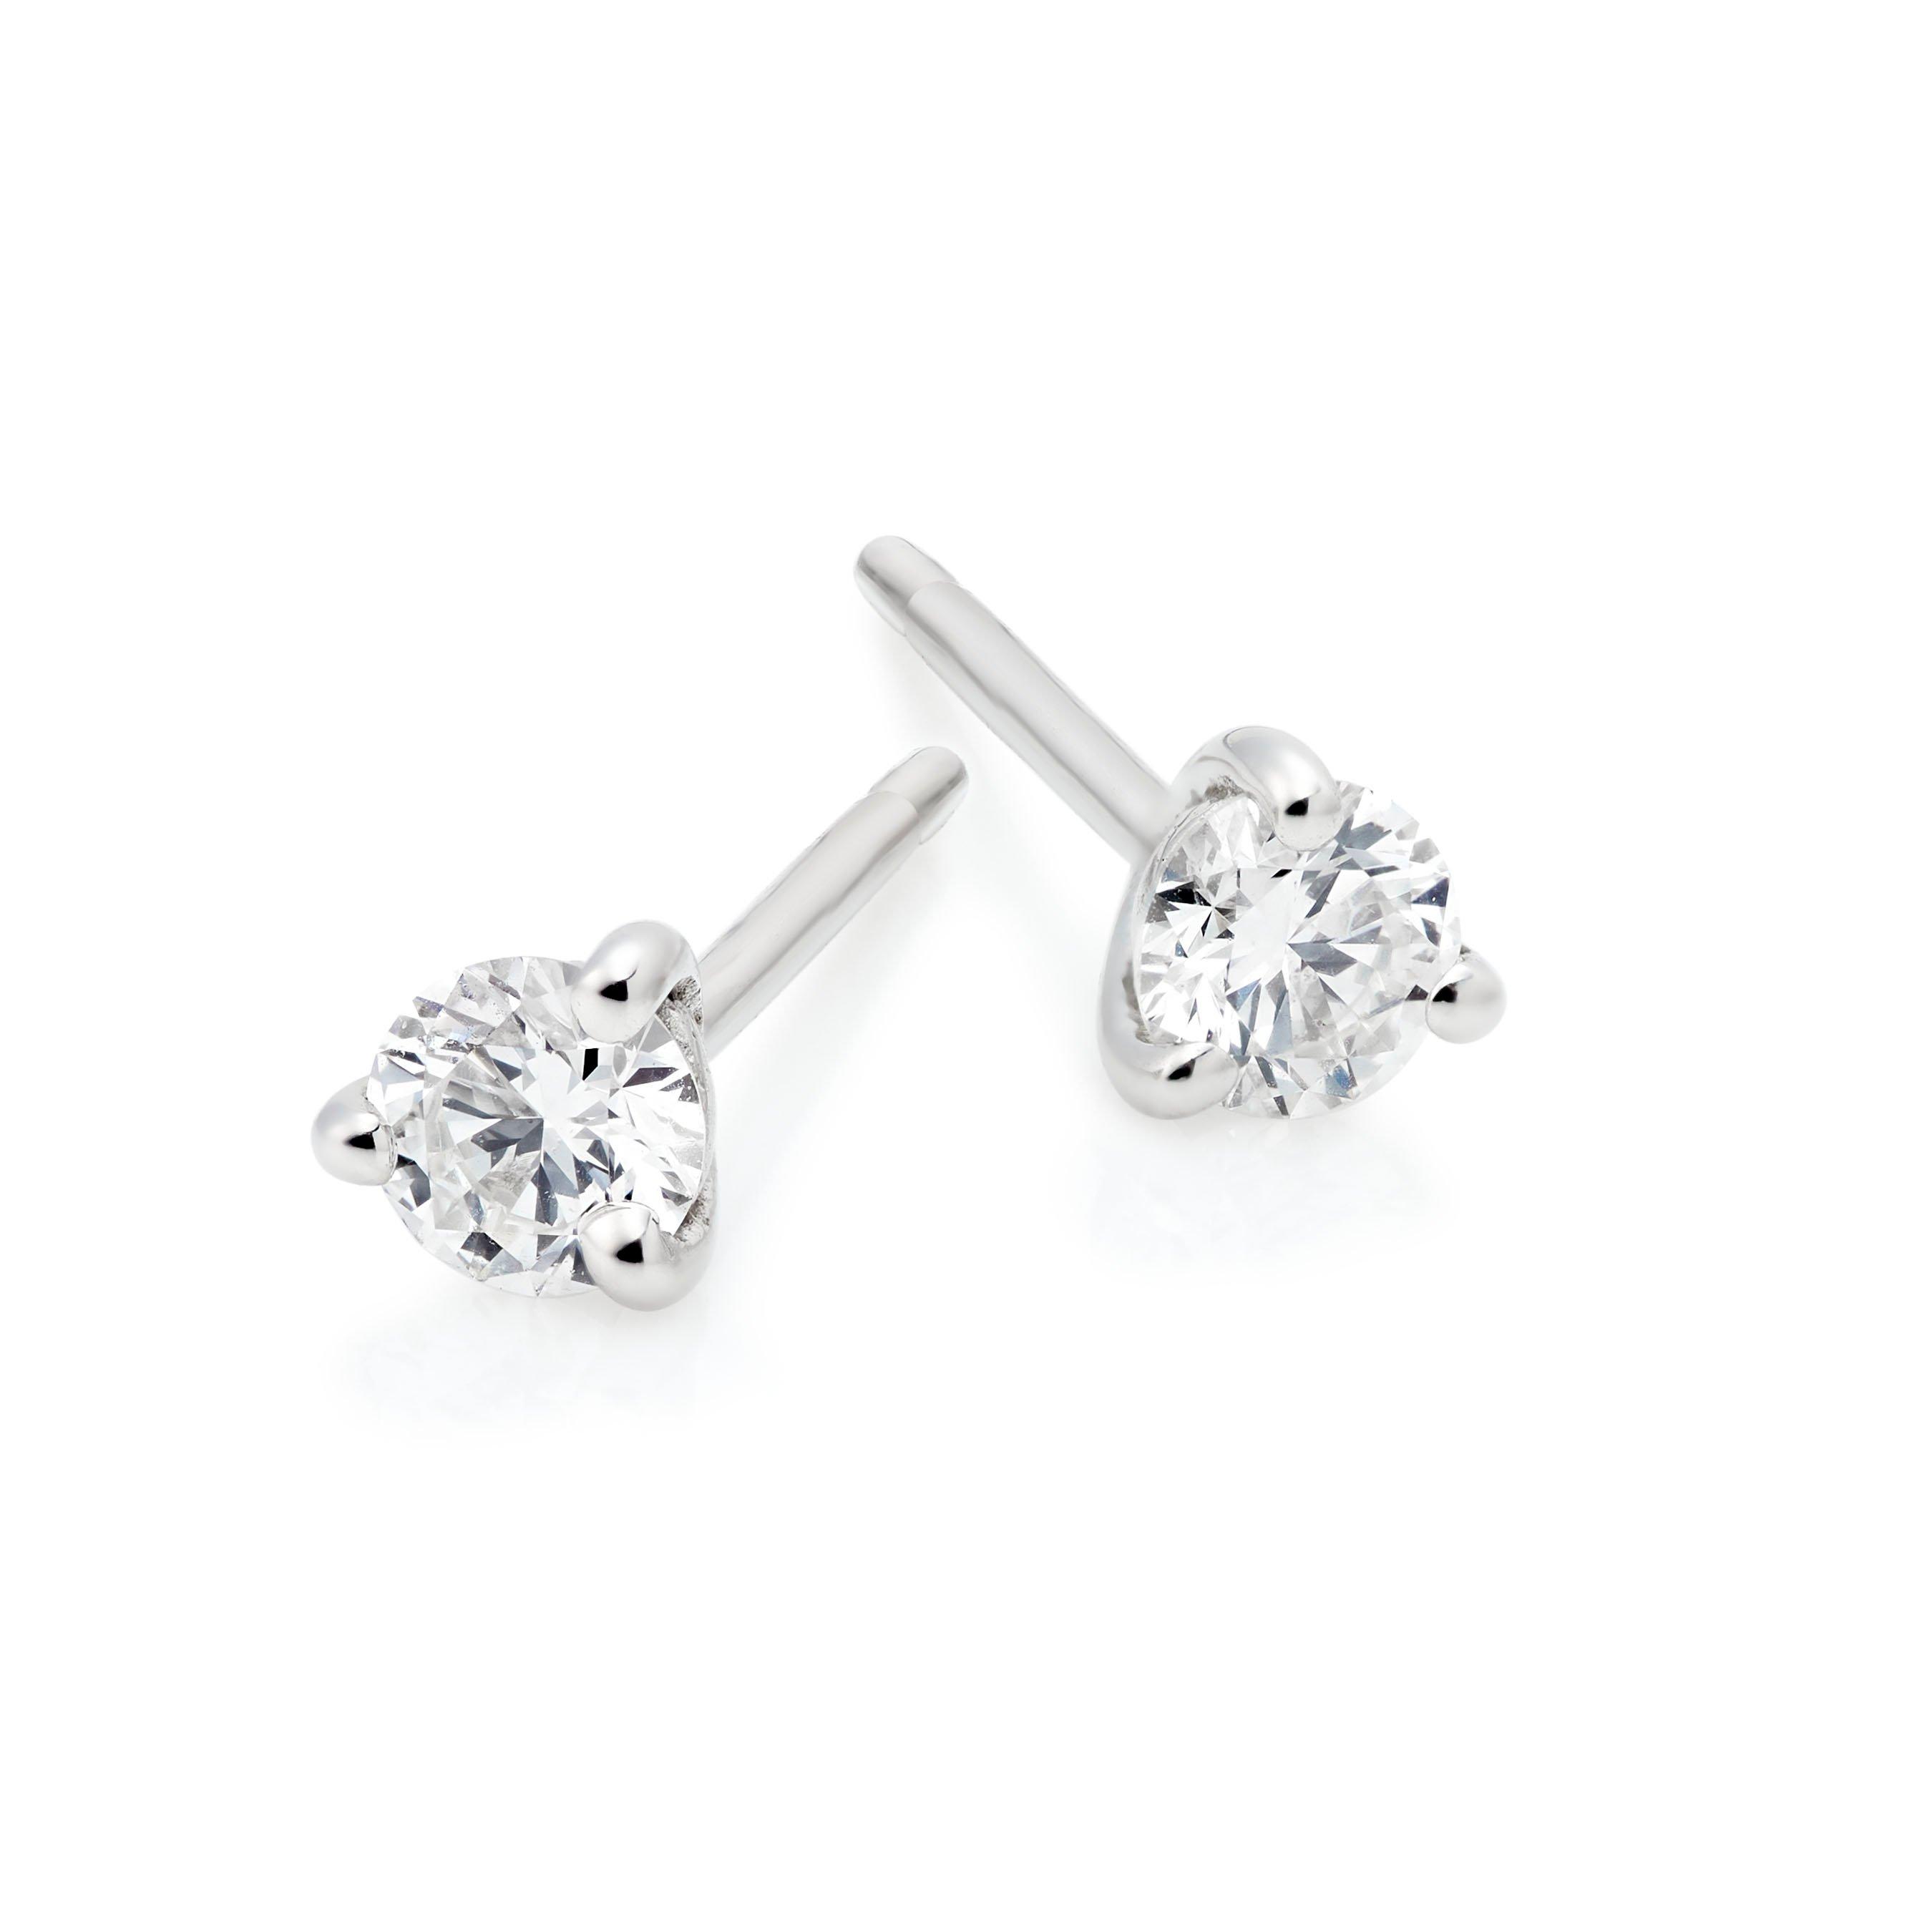 9ct White Gold Diamond Stud Earrings | 0130763 | Beaverbrooks the Jewellers